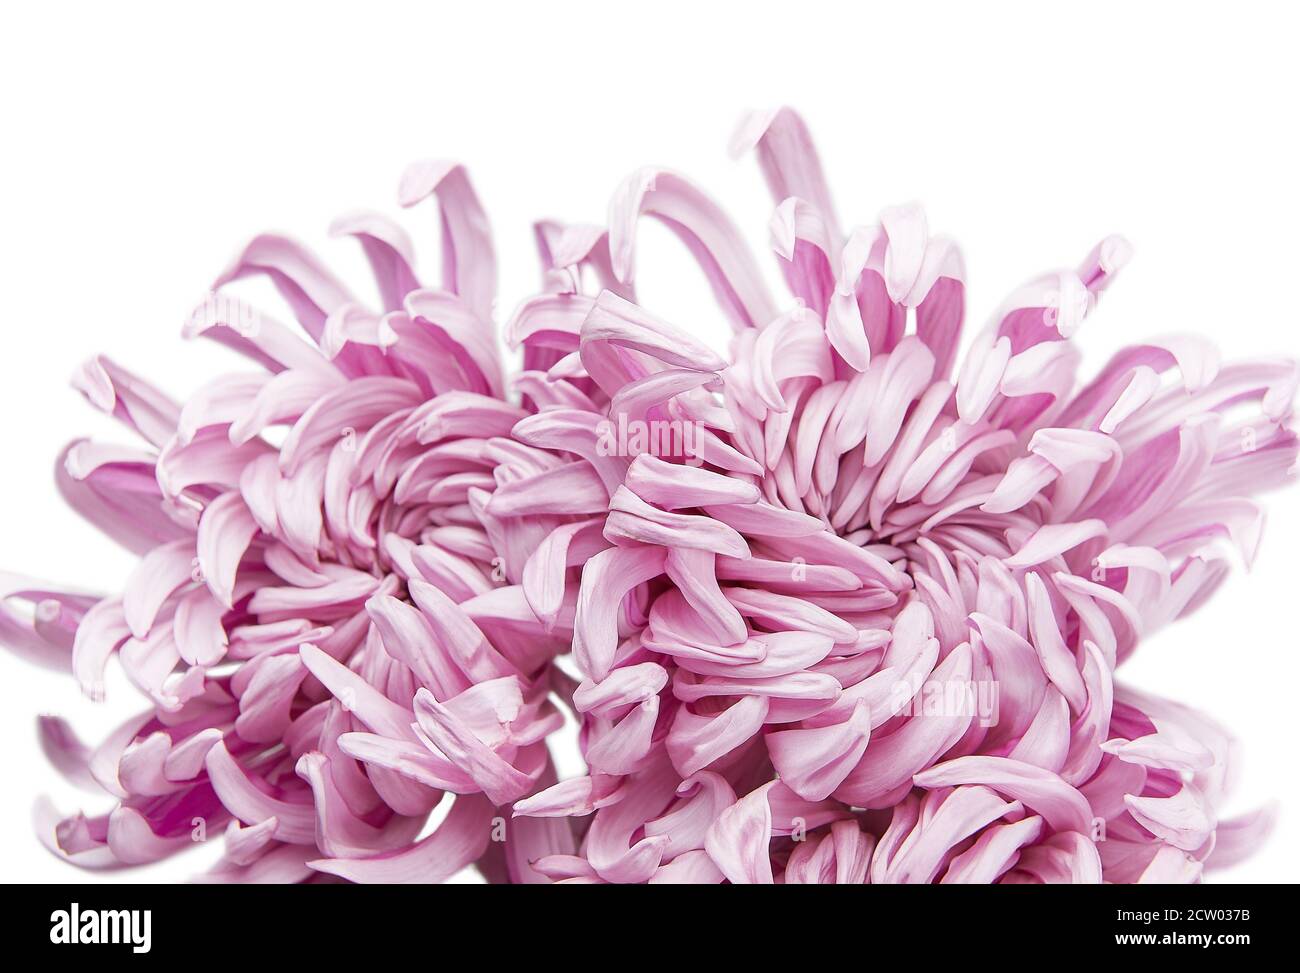 Flower Chrysanthemum grandiflorum 'Vienna pink' isolated on white background. Stock Photo